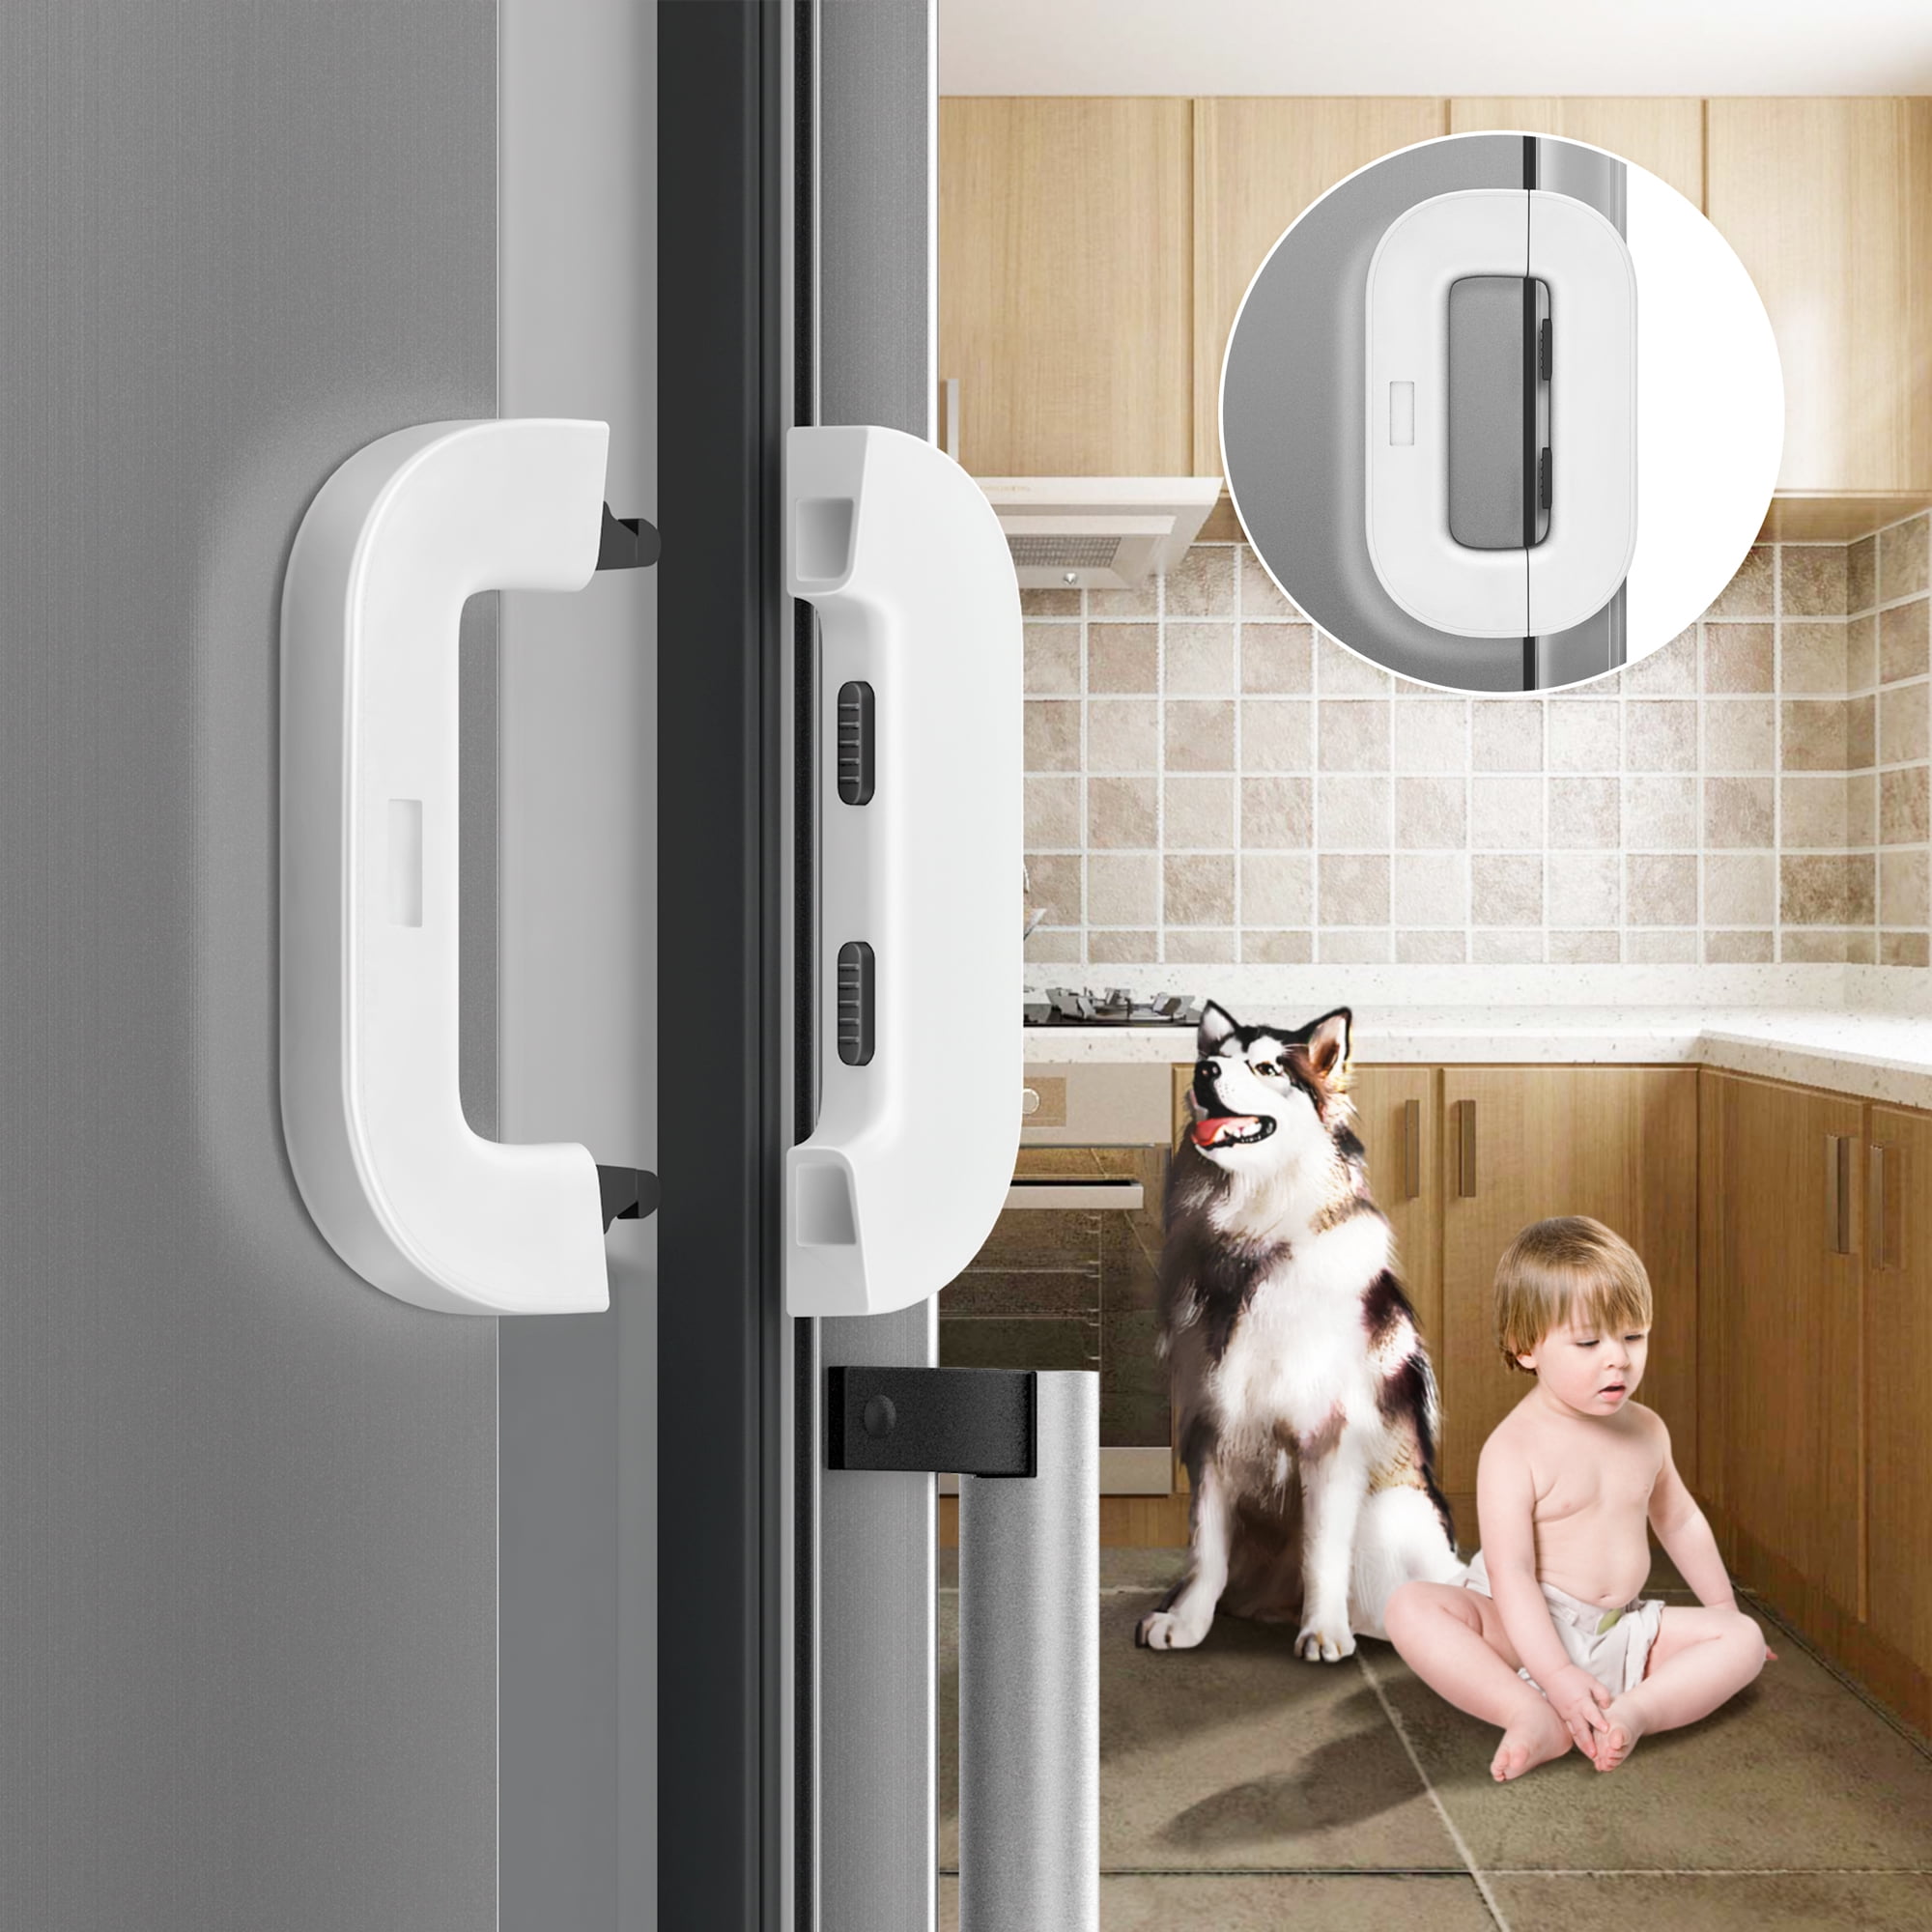 Home Child Baby Cupboard Cabinet Safety Lock Pet Proofing Door Pulls Drawer  Fridge Kids From Joysland, $0.45